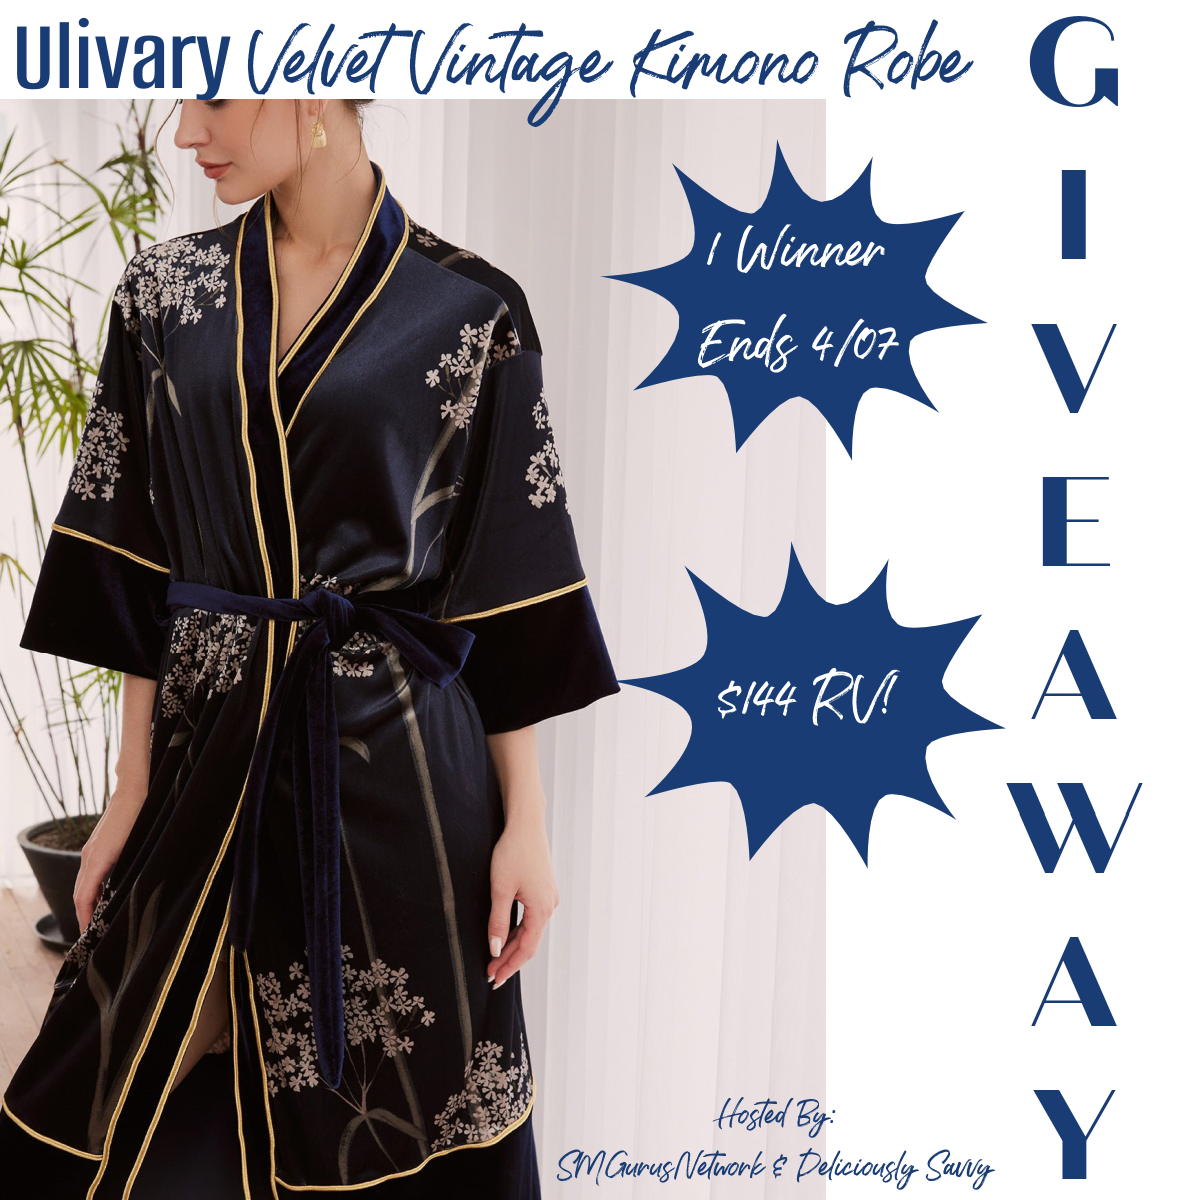 Ulivary Velvet Vintage Kimono Robe Giveaway – Ends 04/07/2024